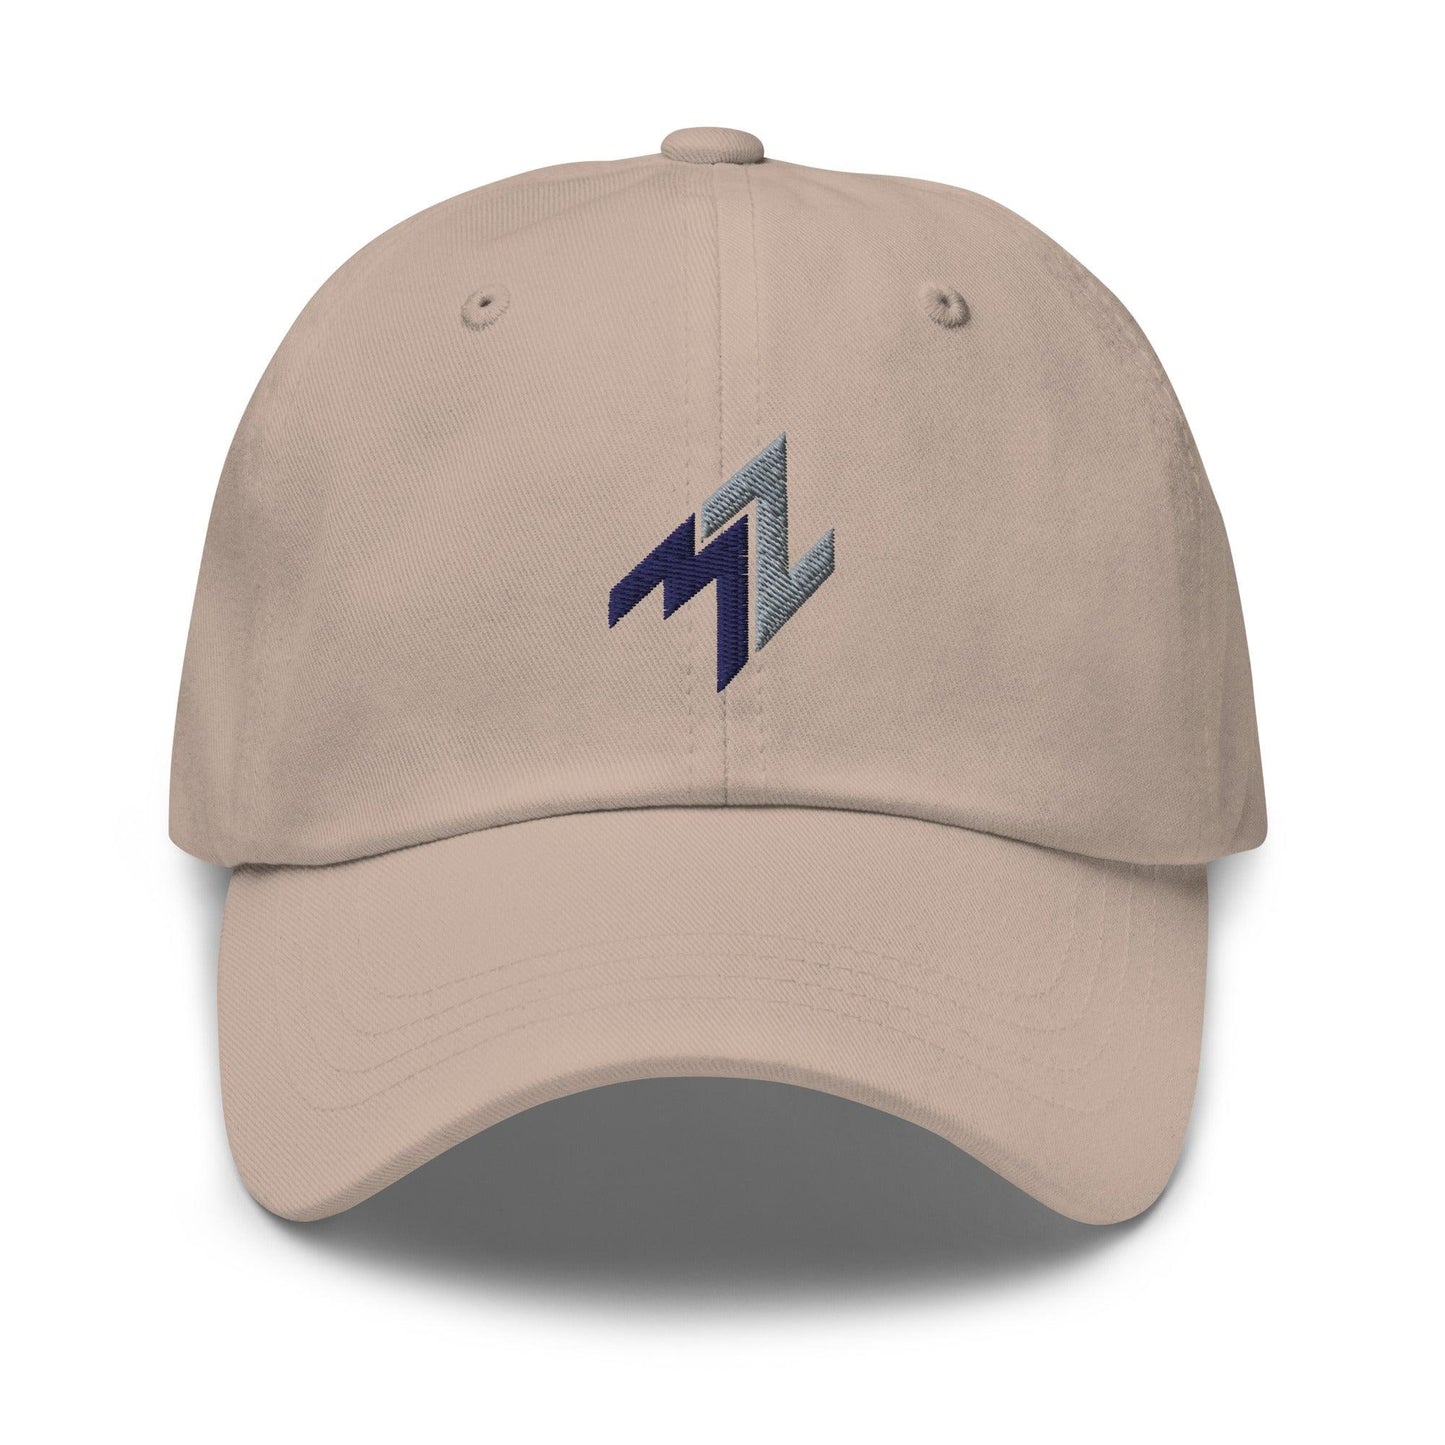 Mike Zunino "Essential" hat - Fan Arch